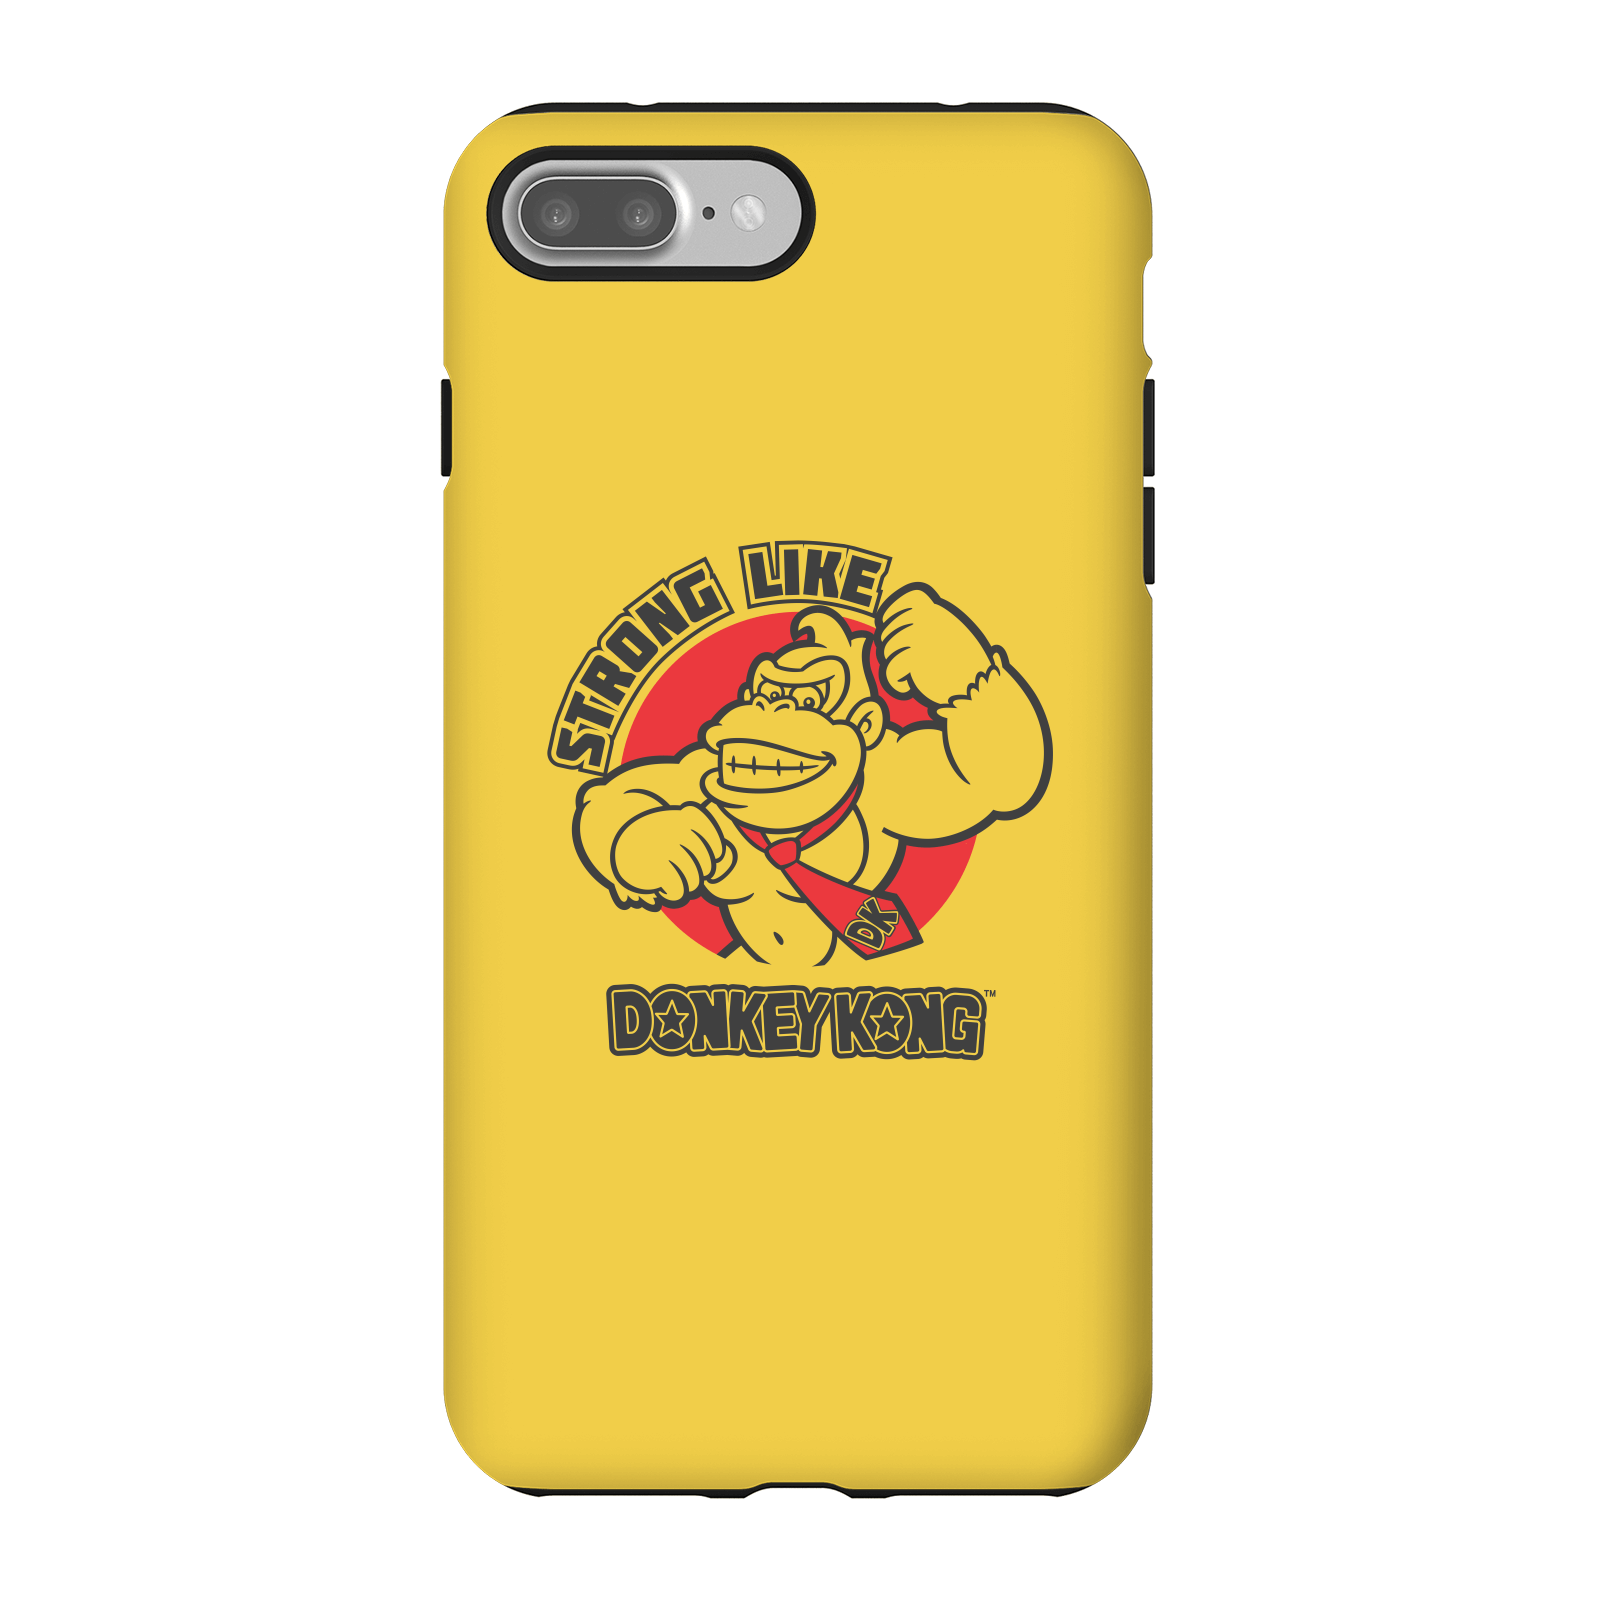 Nintendo Donkey Kong Strong Like Donkey Kong Phone Case - iPhone 7 Plus - Tough Case - Gloss